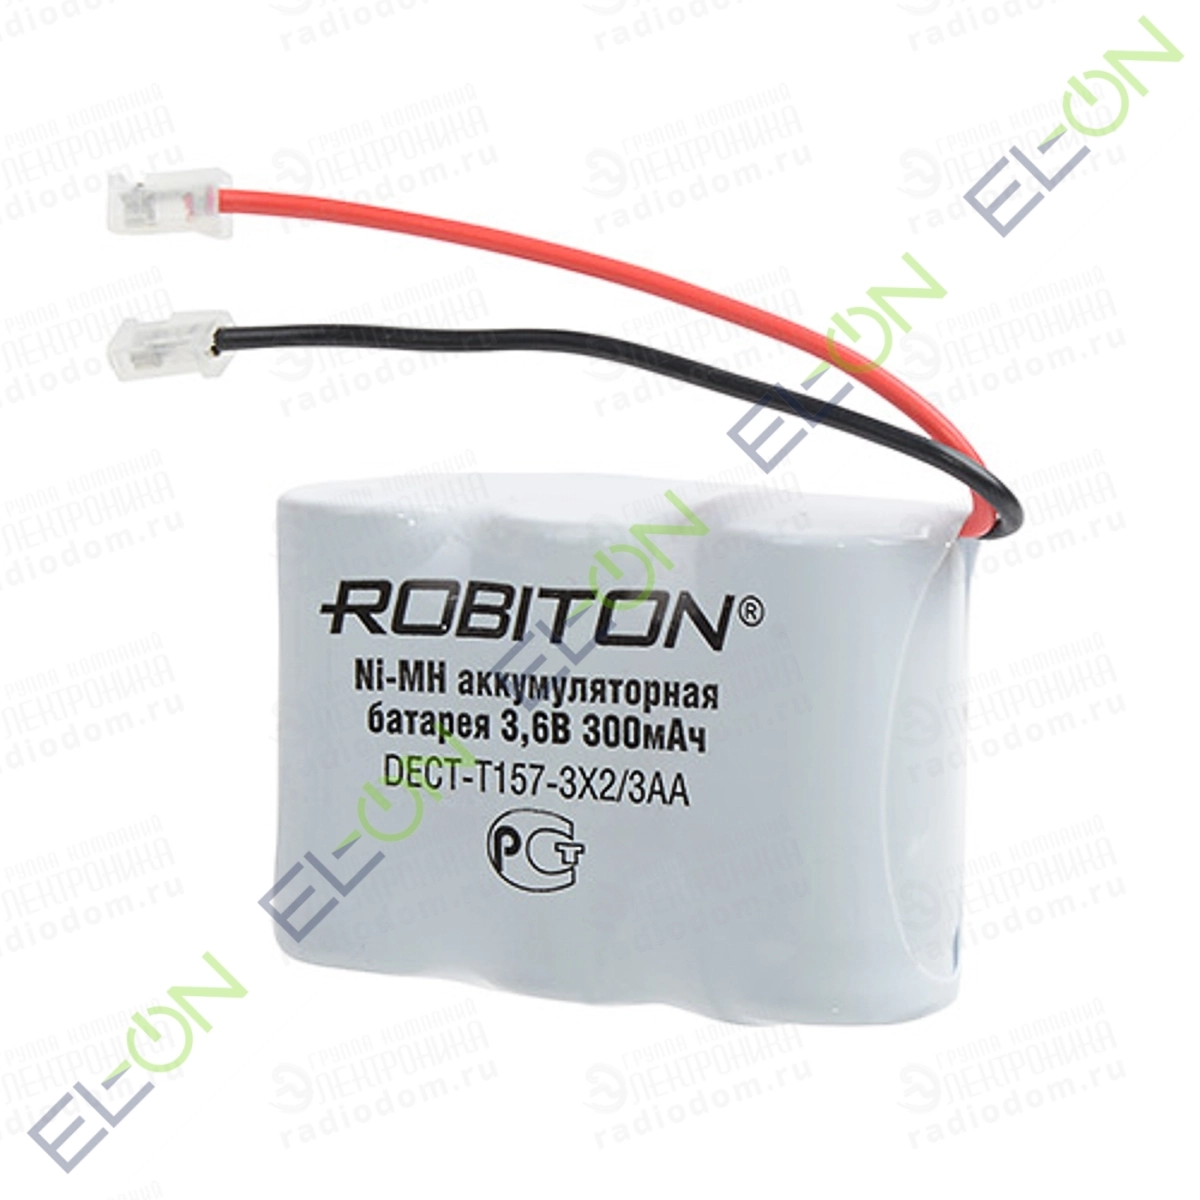 Battery t. Аккумулятор Robiton DECT-t157. Аккумулятор для радиотелефона t157. Аккумулятор ni-MH Robiton. Аккумулятор для радиотелефонов DECT-t160-3xaa Robiton 3.6v 600mah.